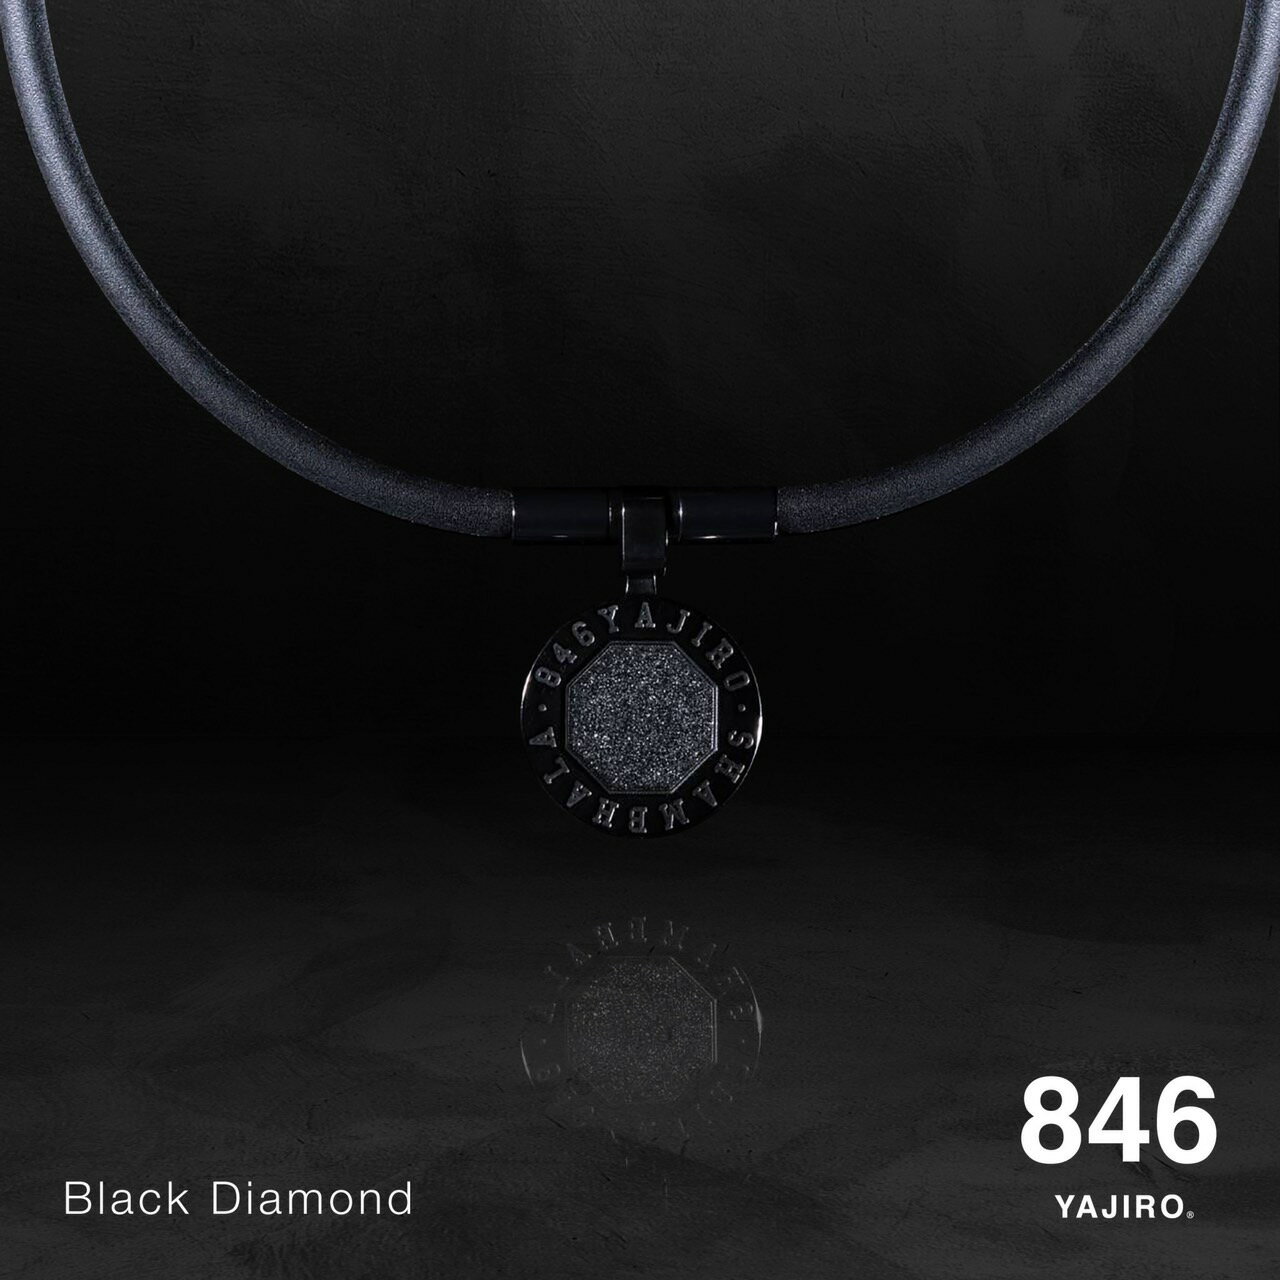 846YAJIRO スポーツネックレス SHAMBHALA Necklace BlackDiamond シャンバラネックレス ブラックダイヤモンド 磁気ネックレス YAJIROクリスタル配合 チューブタイプネックレス プレゼント